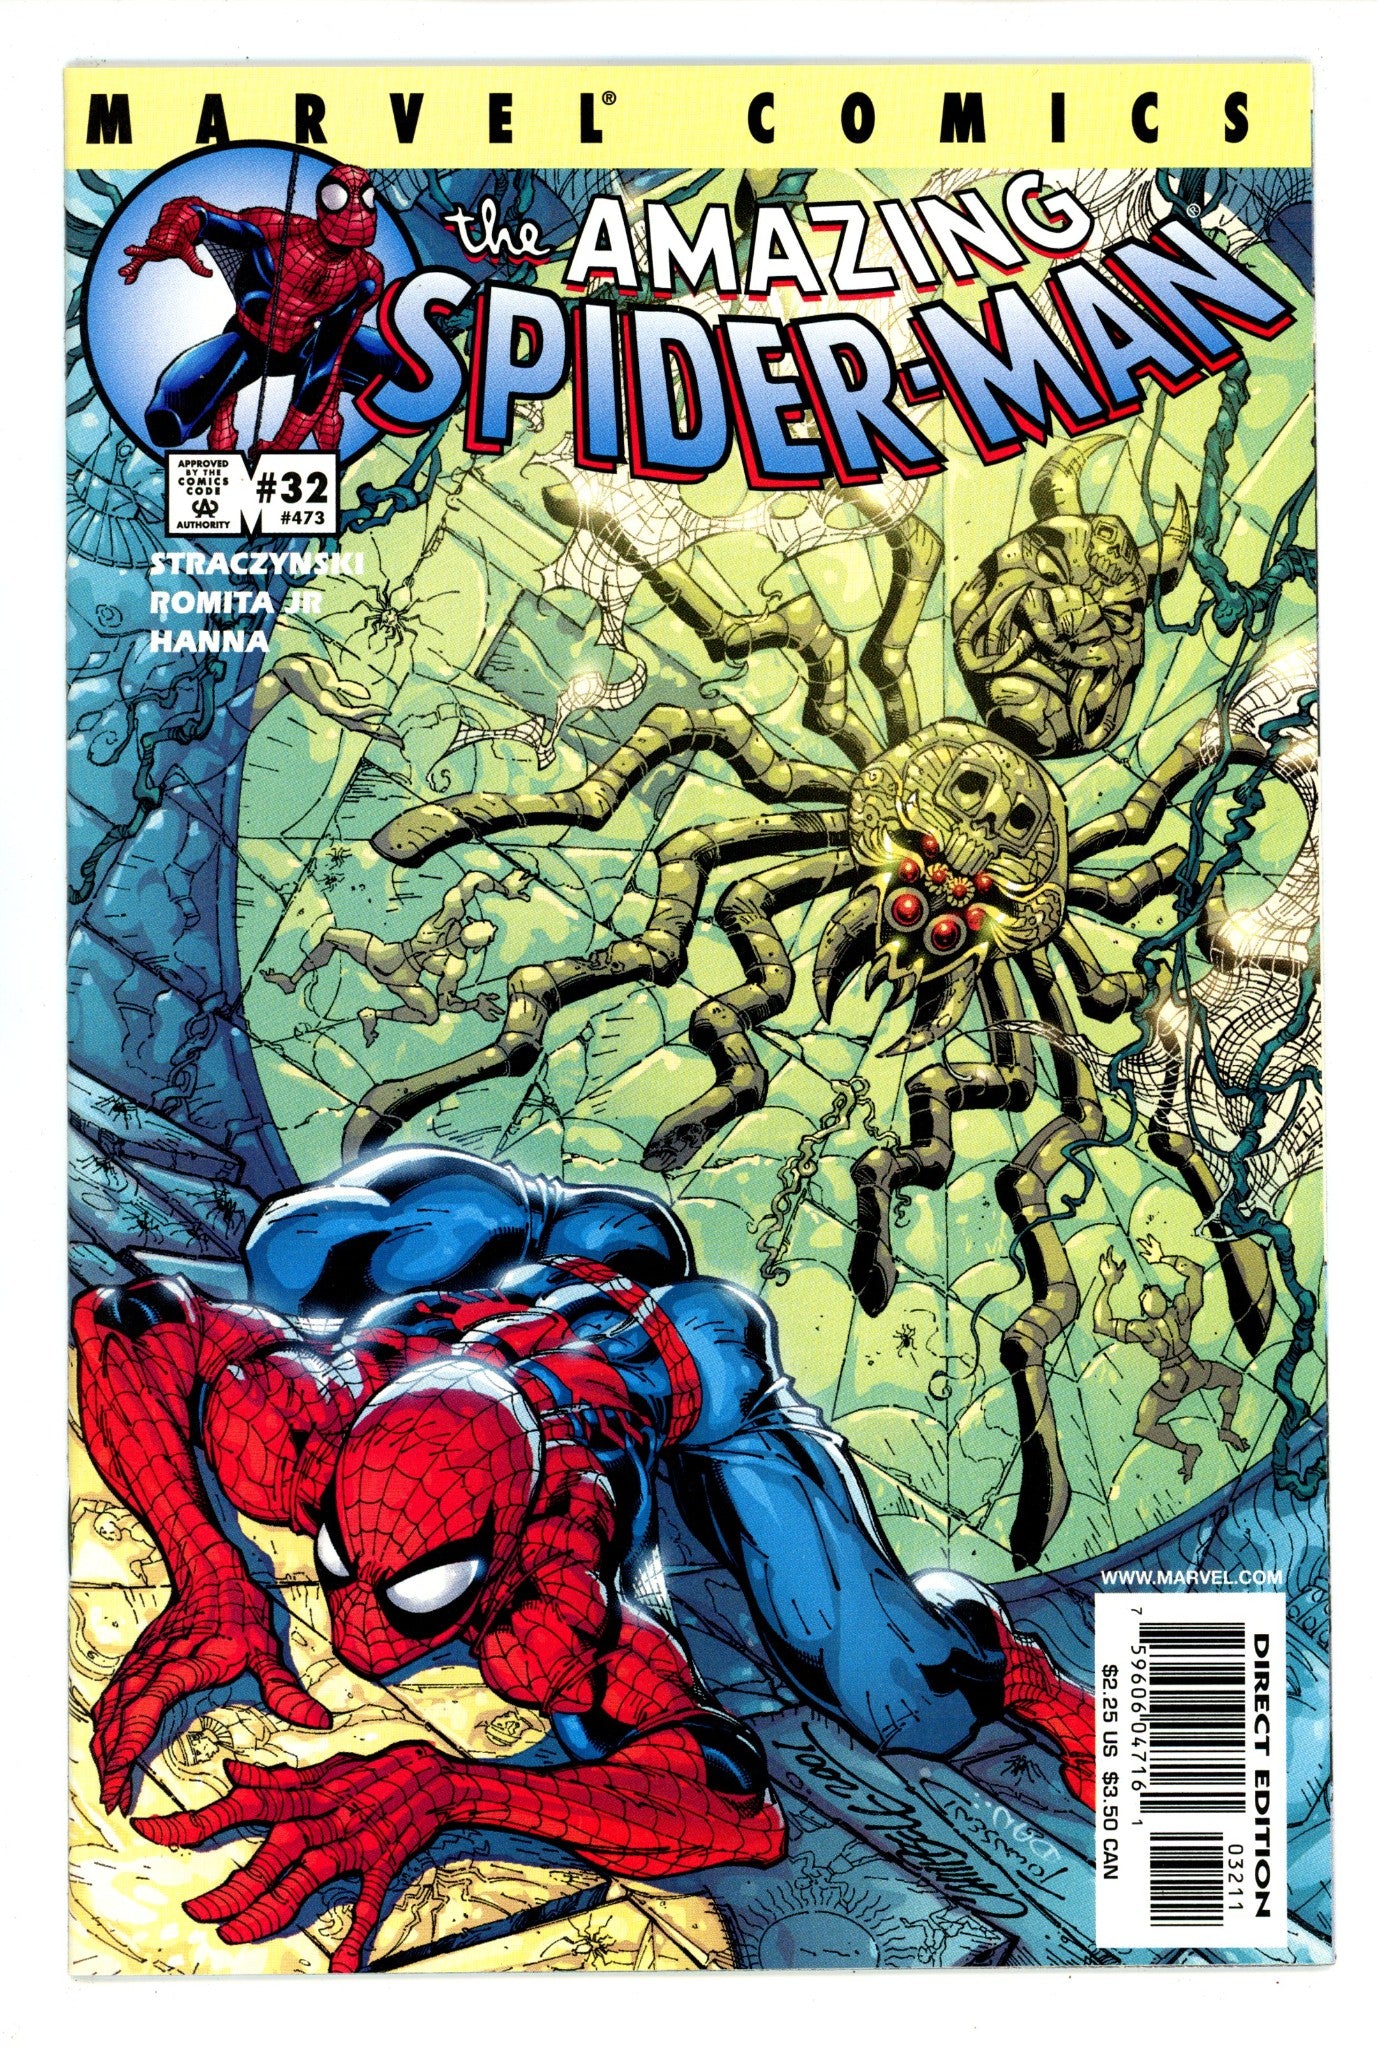 The Amazing Spider-Man Vol 2 32 (473) VF/NM (9.0) (2001) 